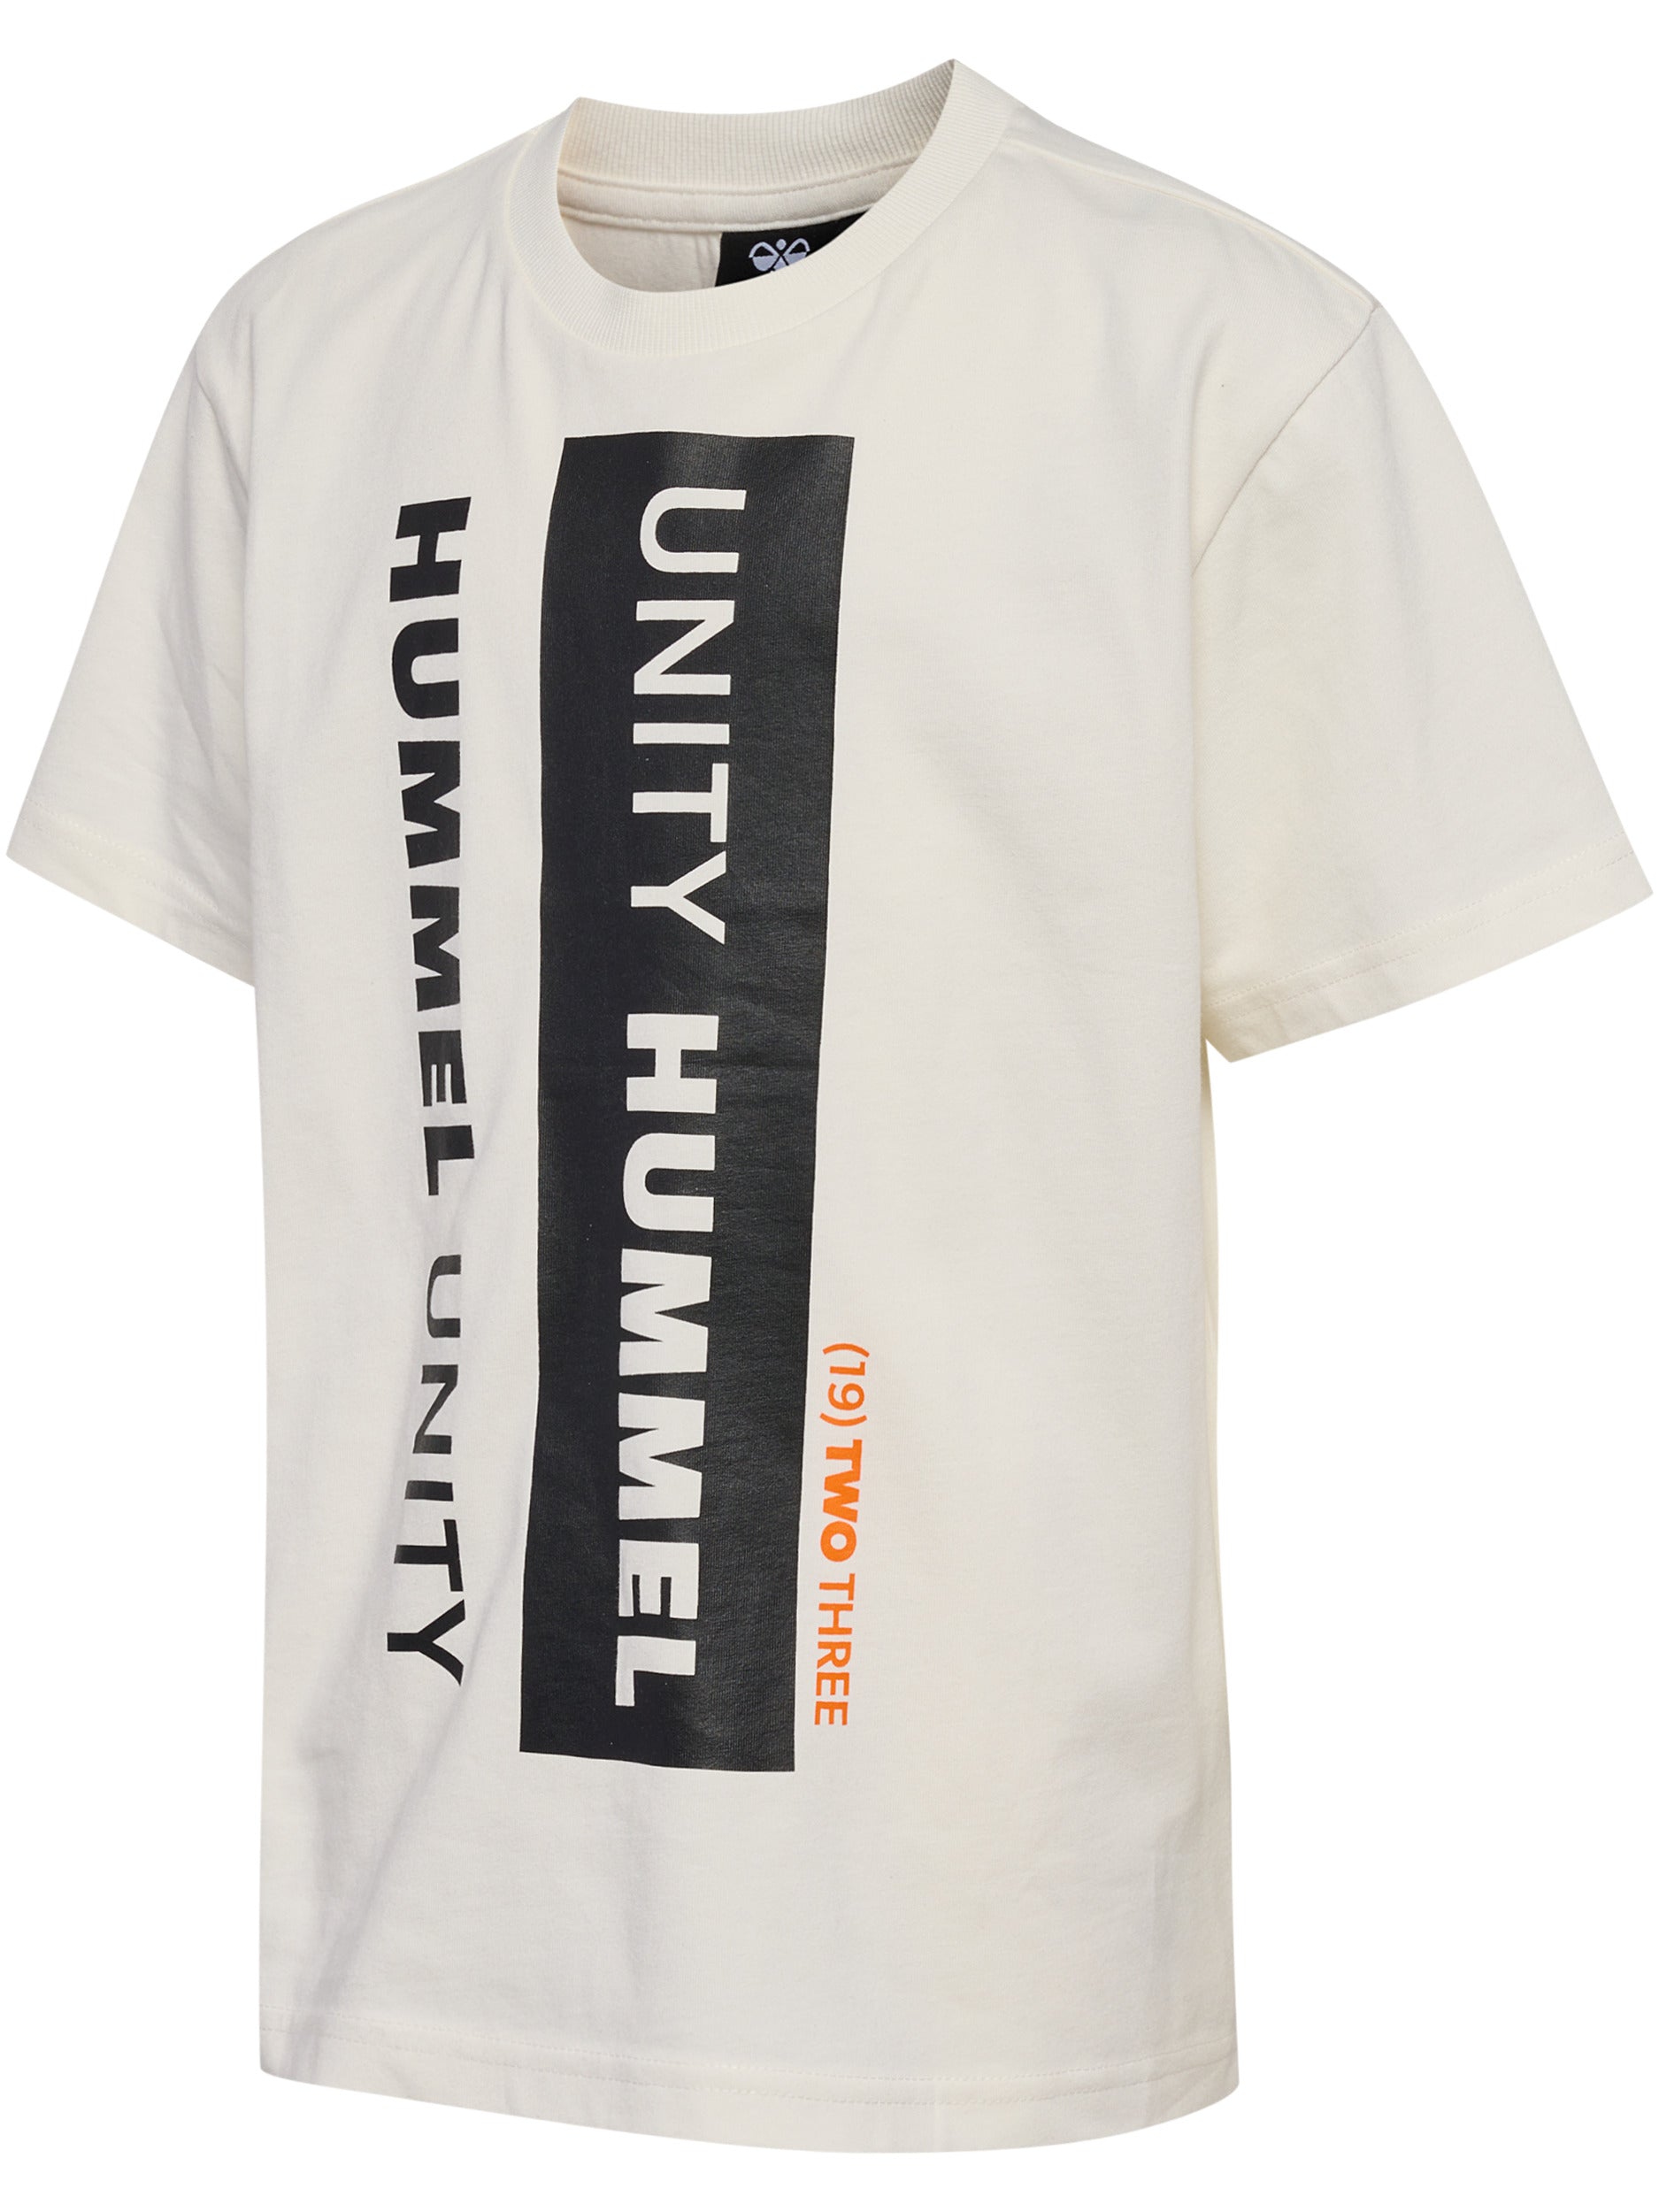 Hummel T-shirt Unity S/S